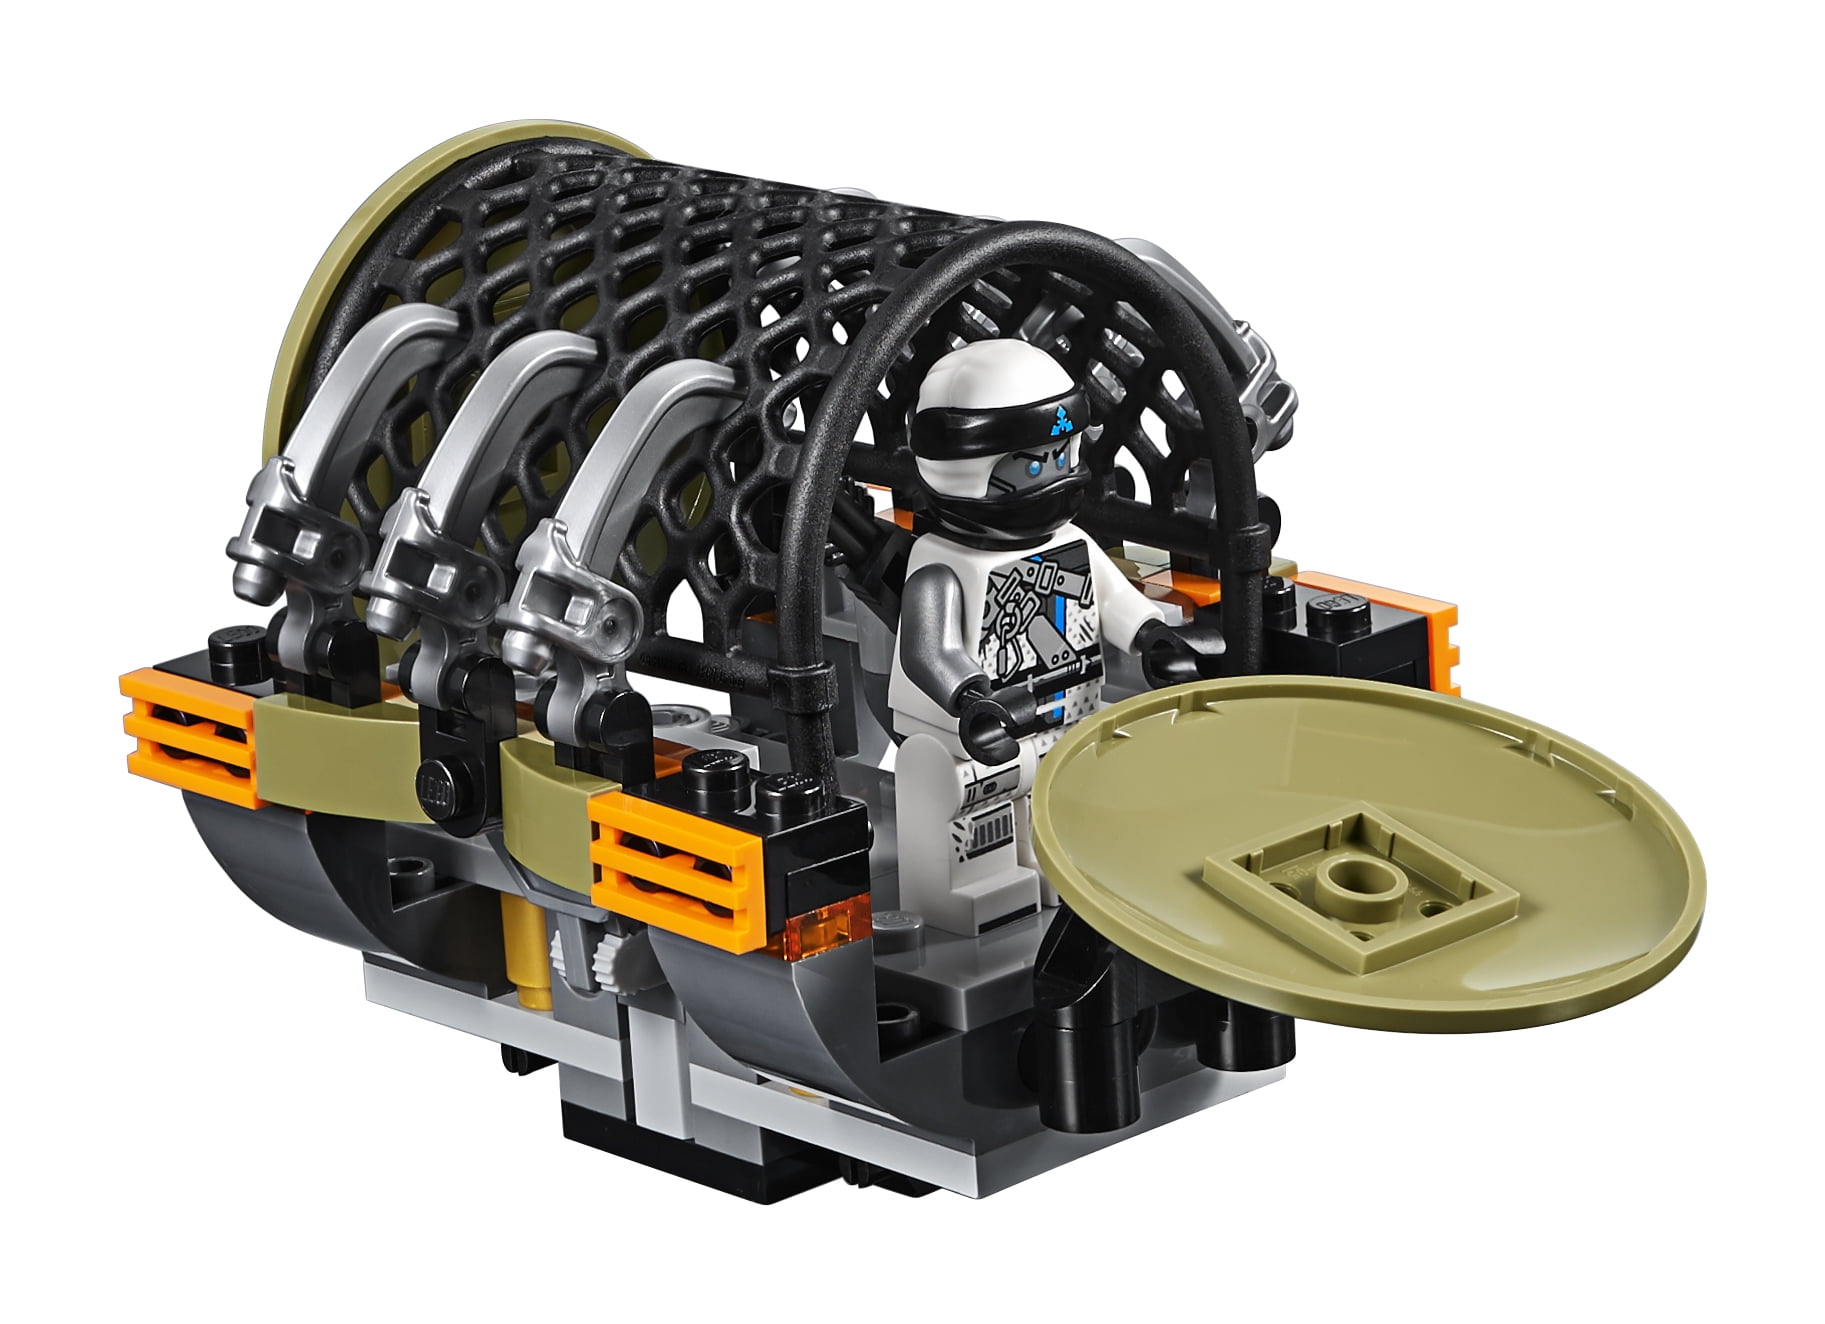 Forbigående Billy ged nudler LEGO Ninjago Dieselnaut 70654 Ninja Warrior Tank Building Toy - Walmart.com